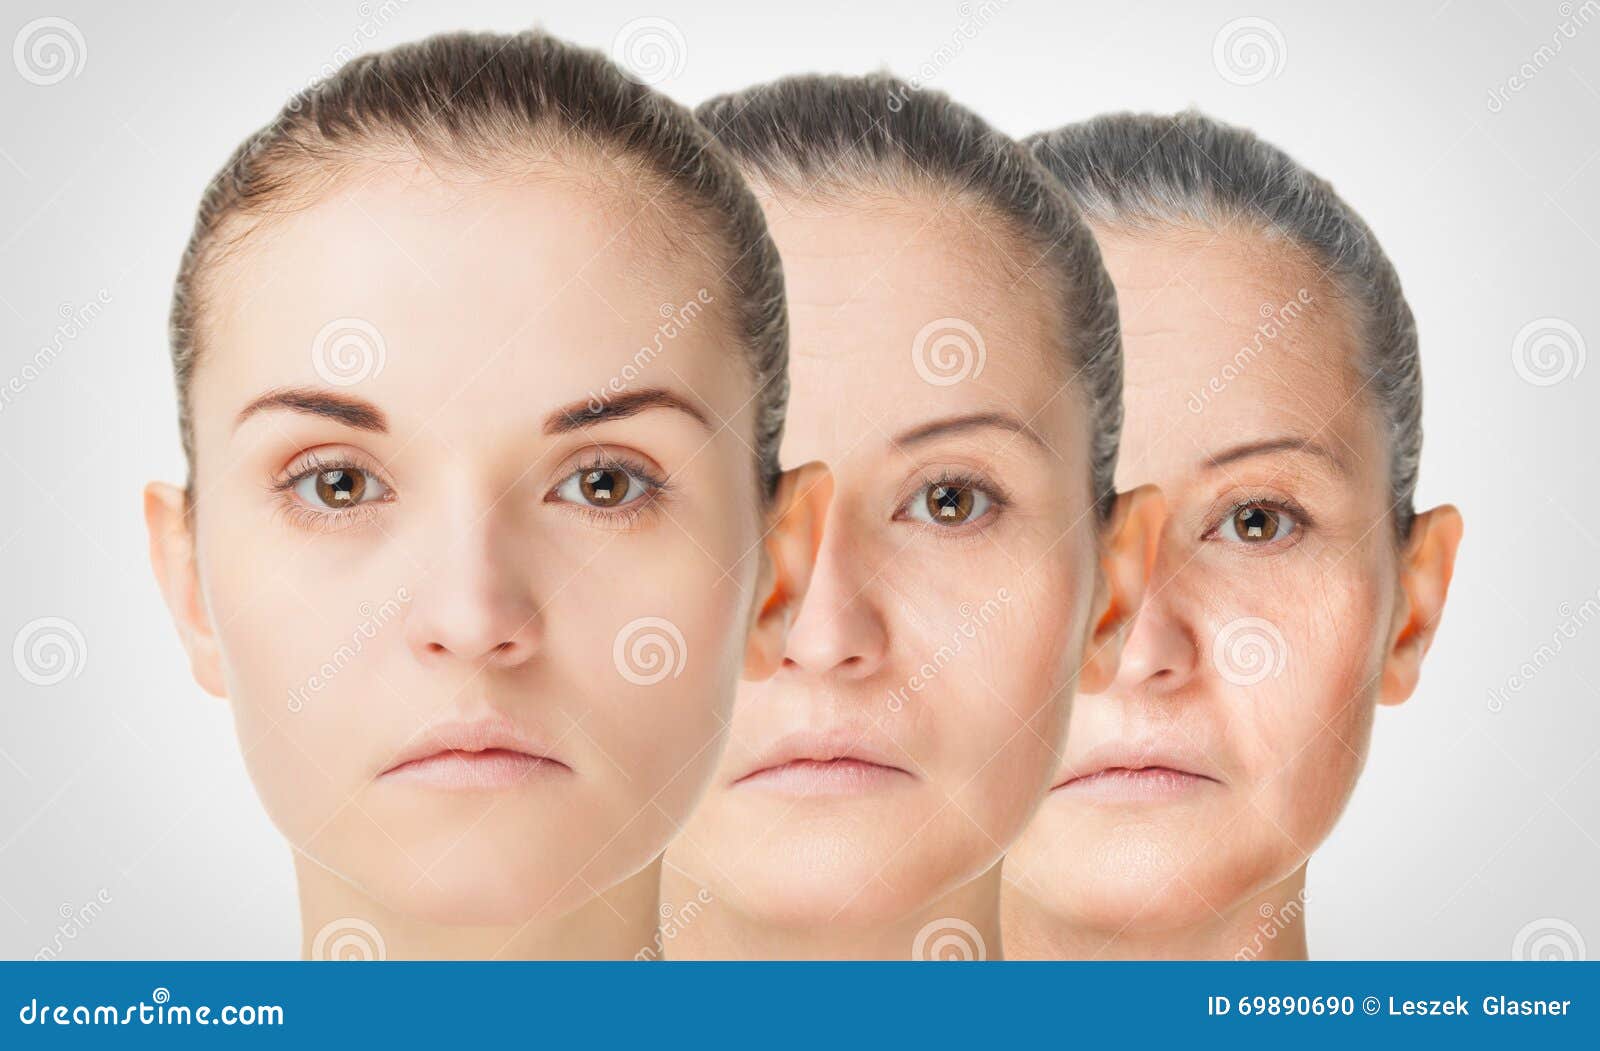 aging process, rejuvenation anti-aging skin procedures